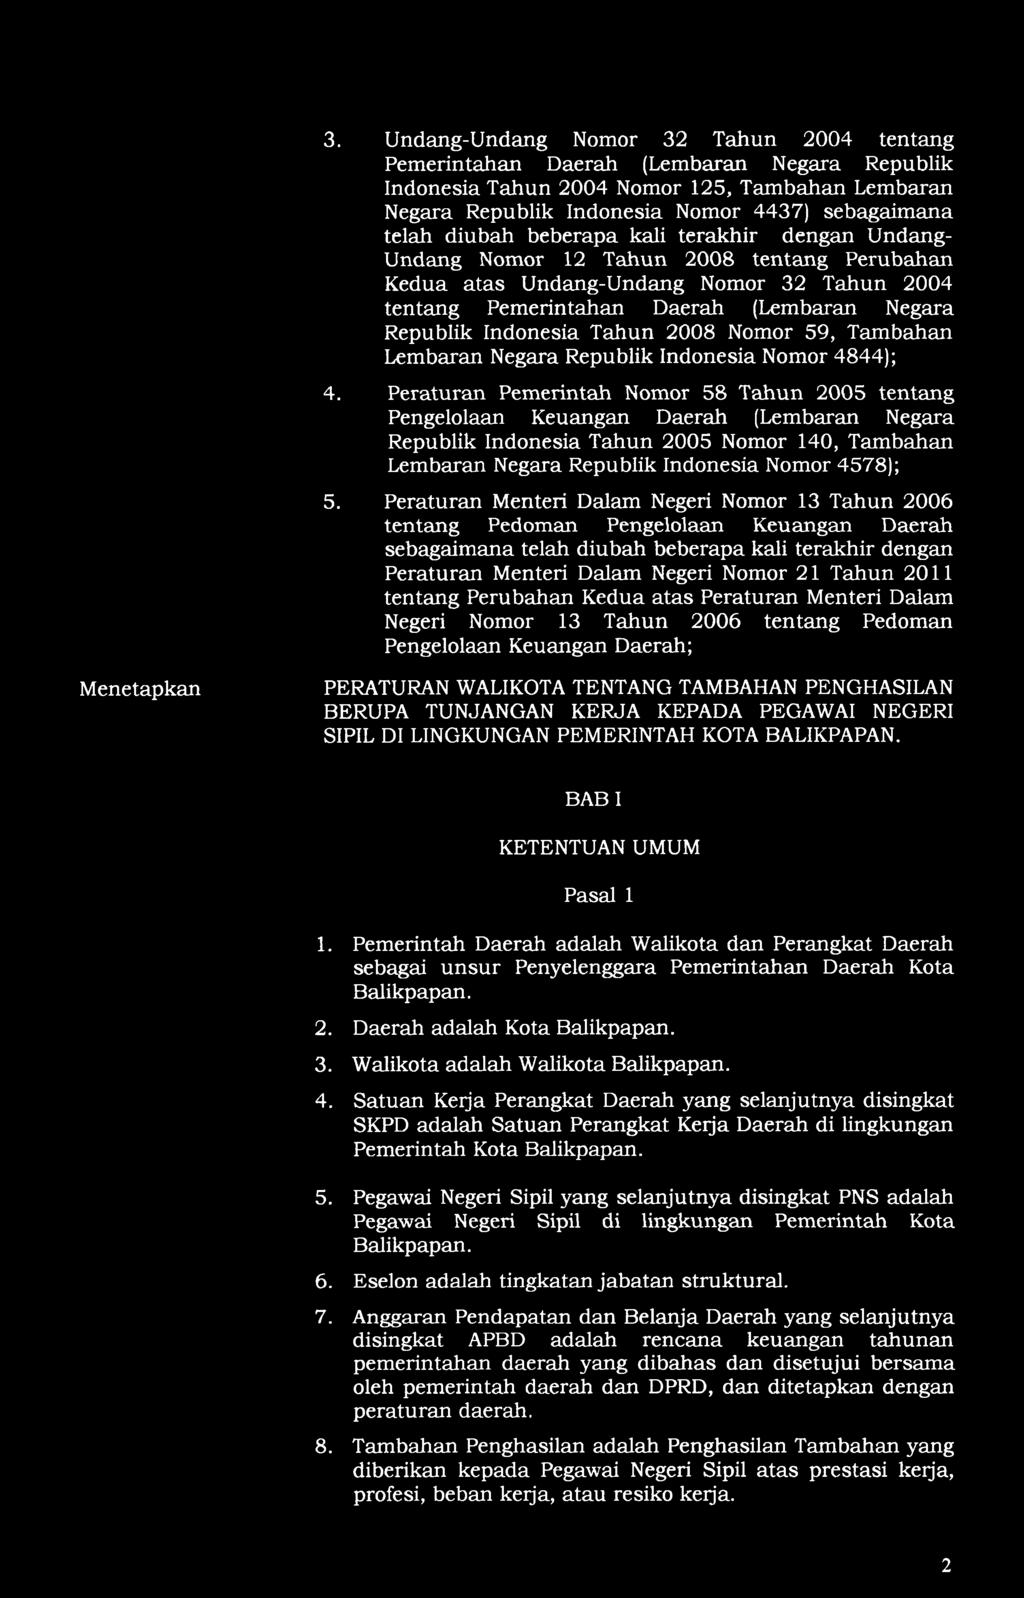 diubah beberapa kali terakhir dengan Undang- Undang Nomor 12 Tahun 2008 tentang Perubahan Kedua atas Undang-Undang Nomor 32 Tahun 2004 tentang Pemerintahan Daerah (Lembaran Negara Republik Indonesia